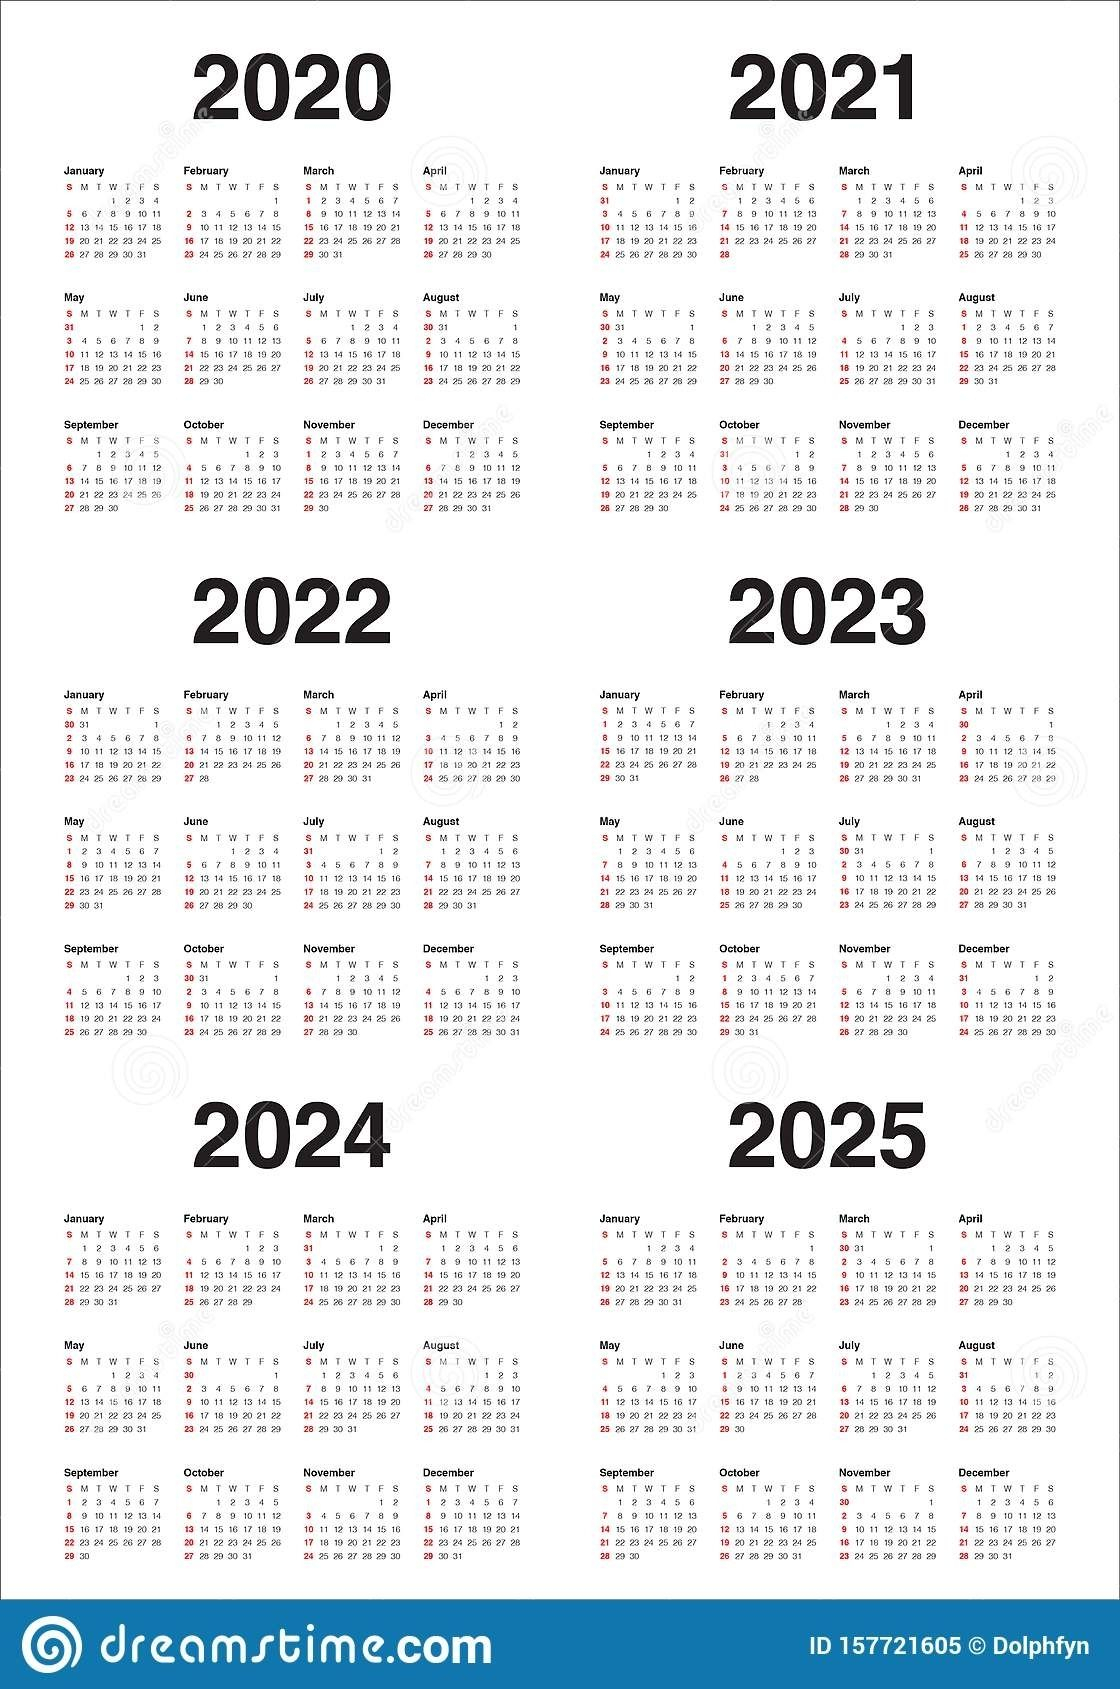 Free Printable 3 Year Calendar 2021 To 2023 - Yearmon